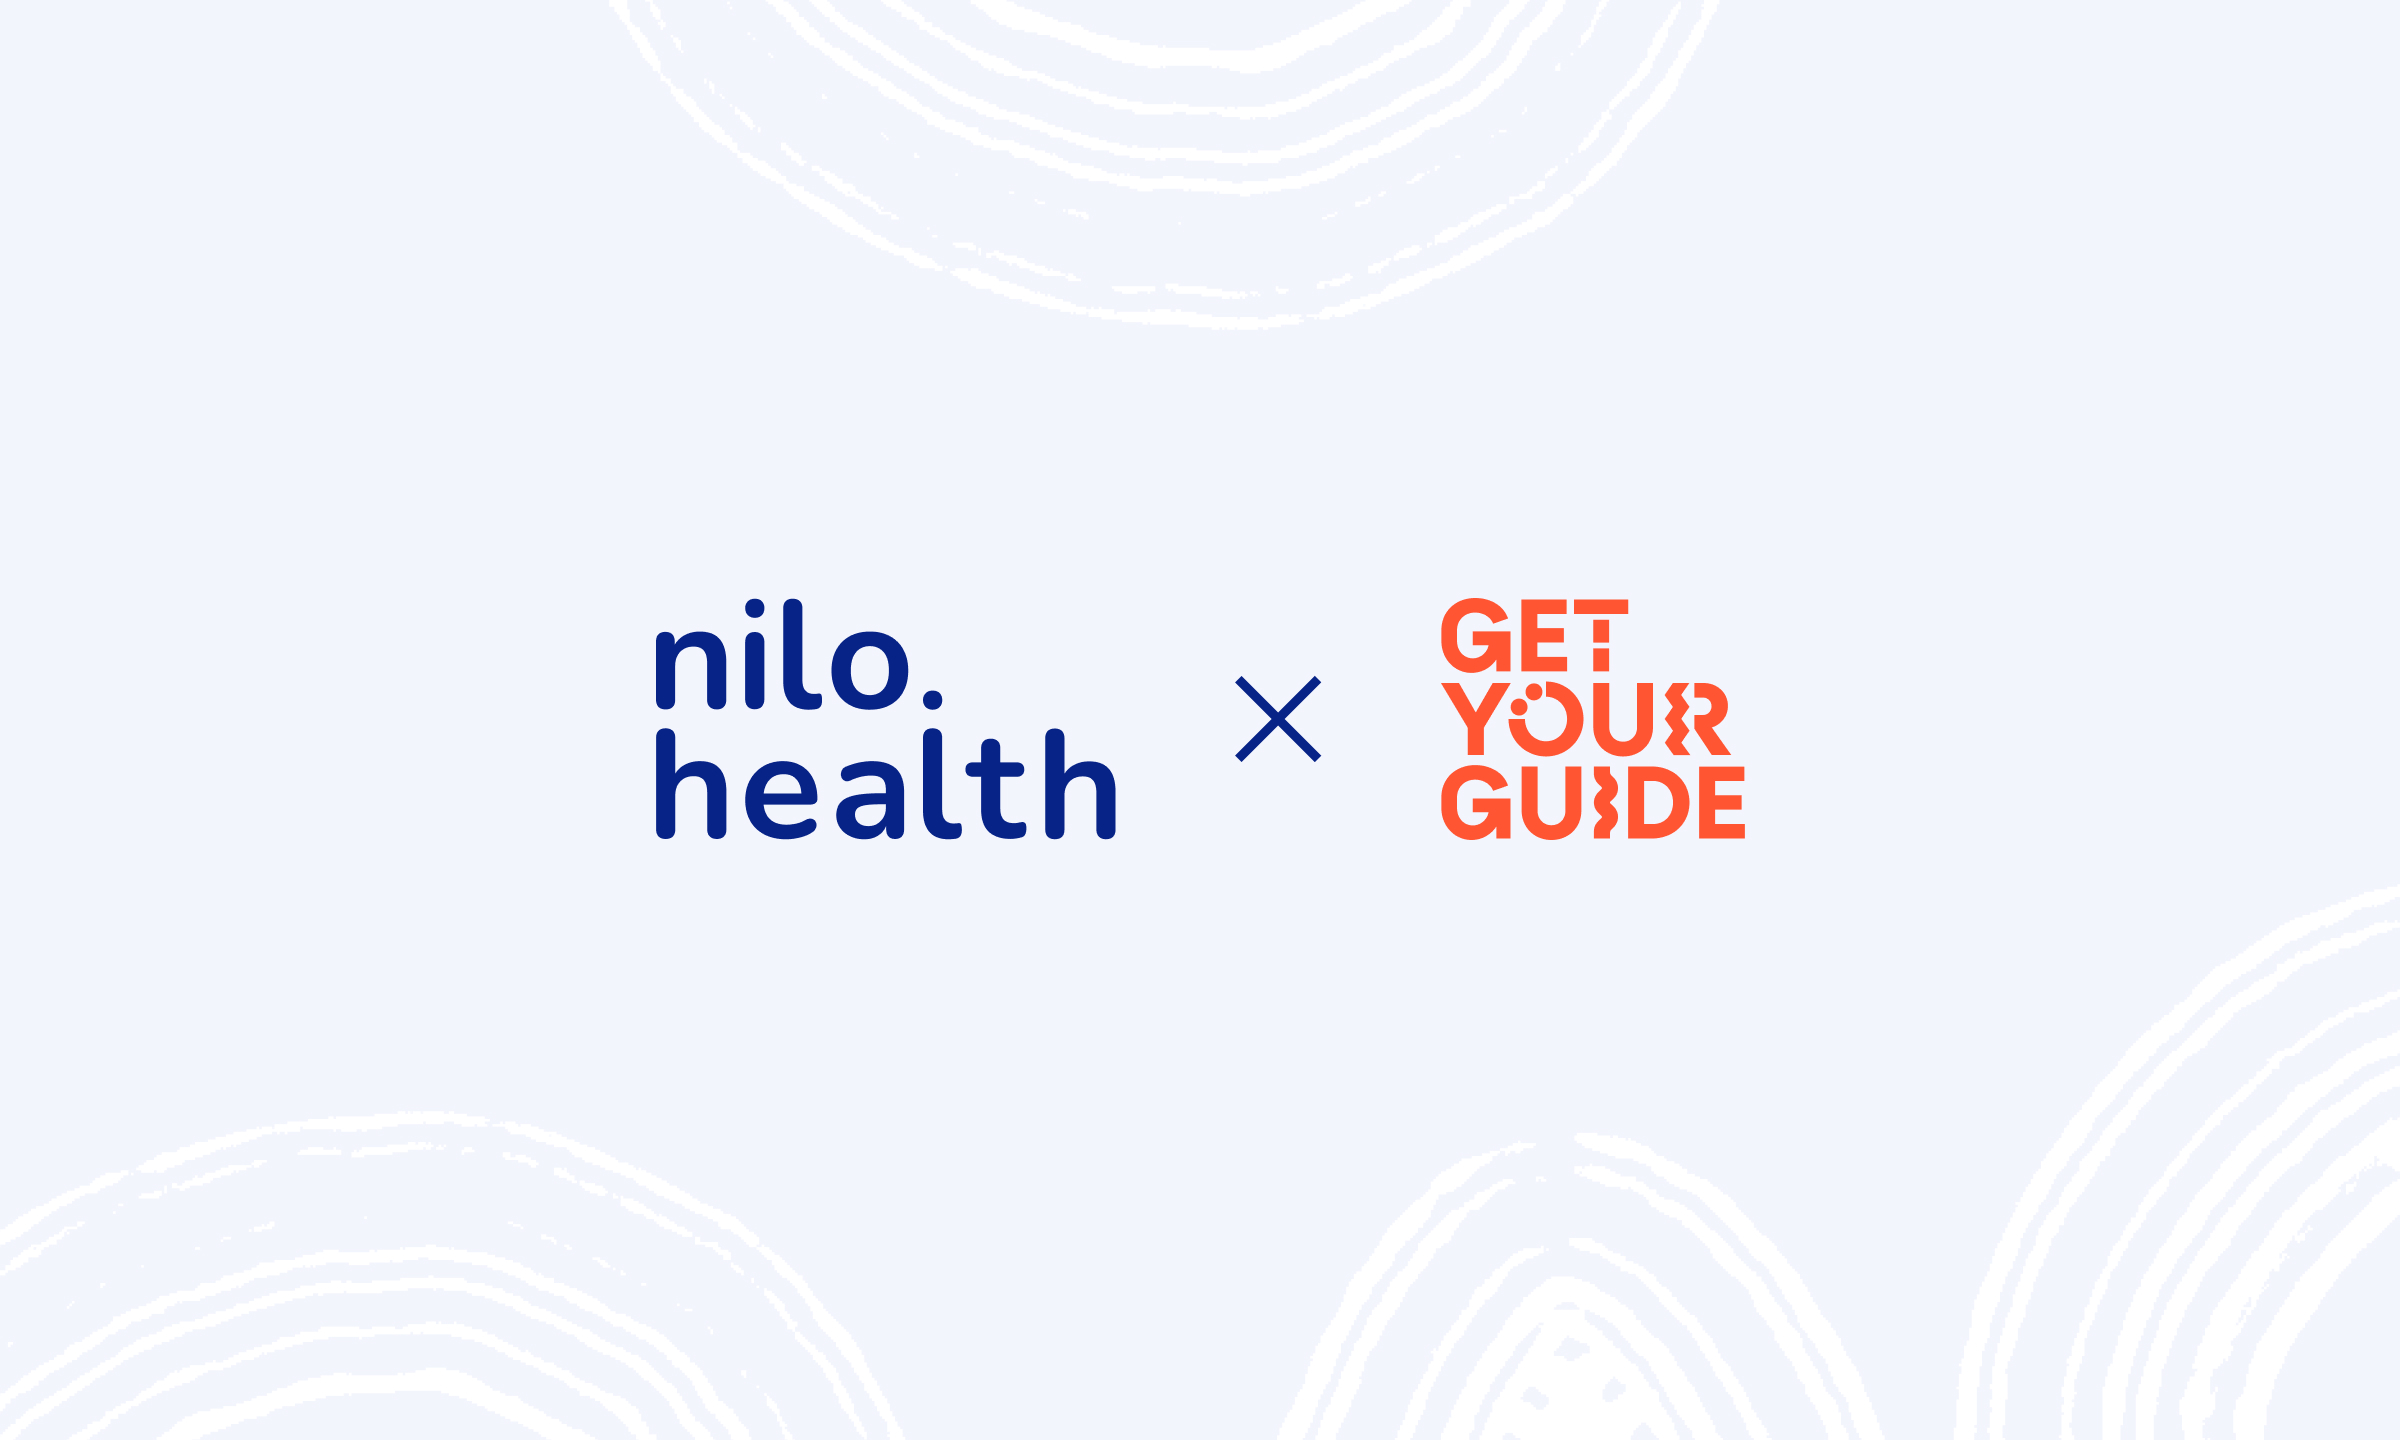 GetYourGuide meets nilo.health